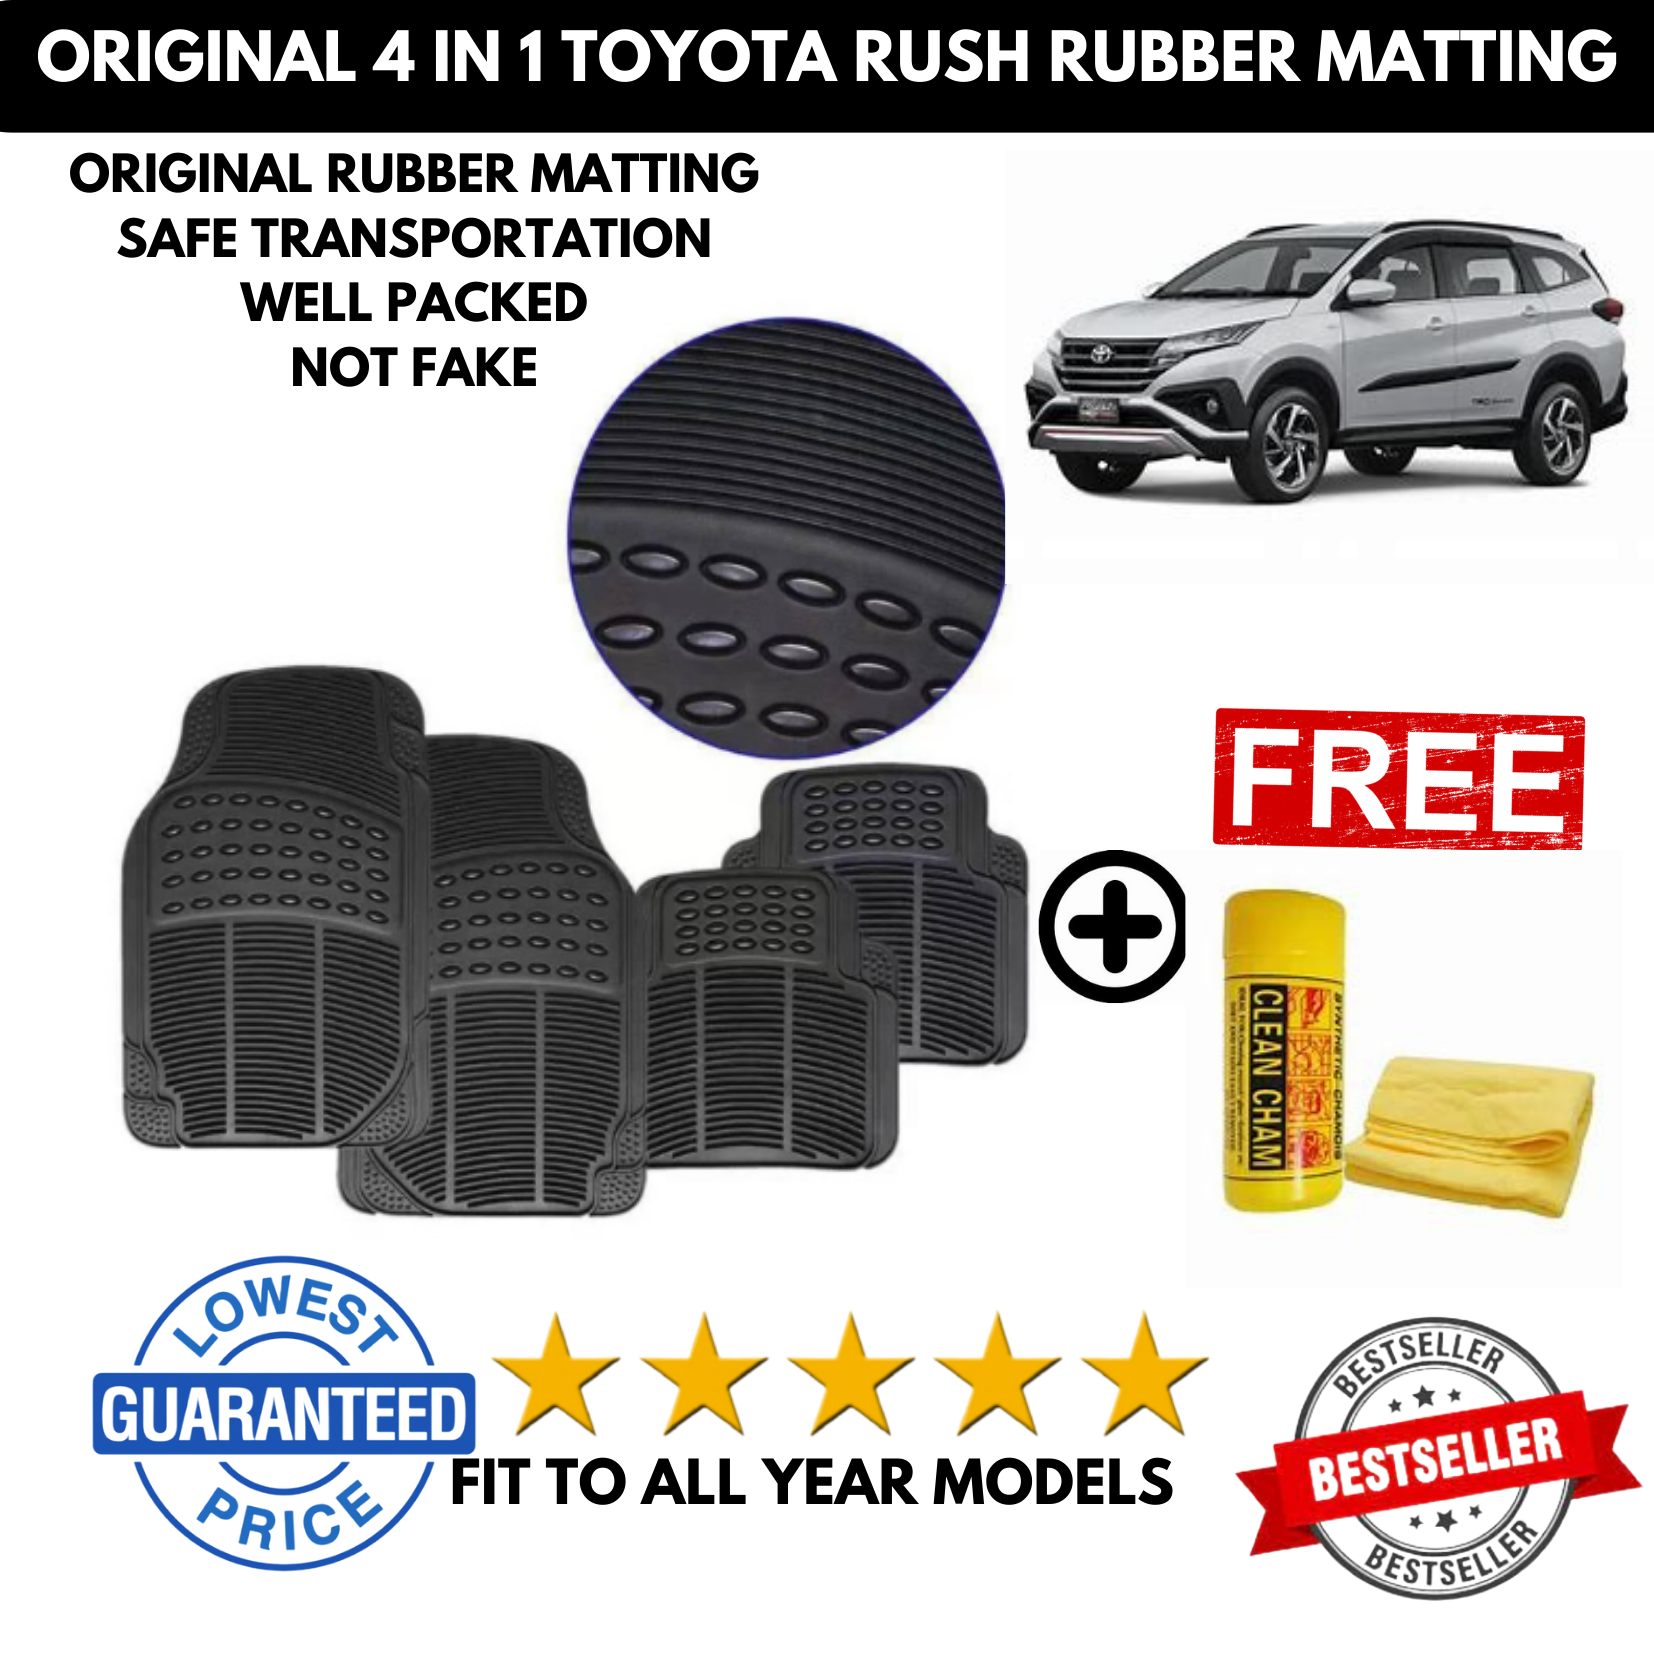 Shop Toyota Rush Carpet online